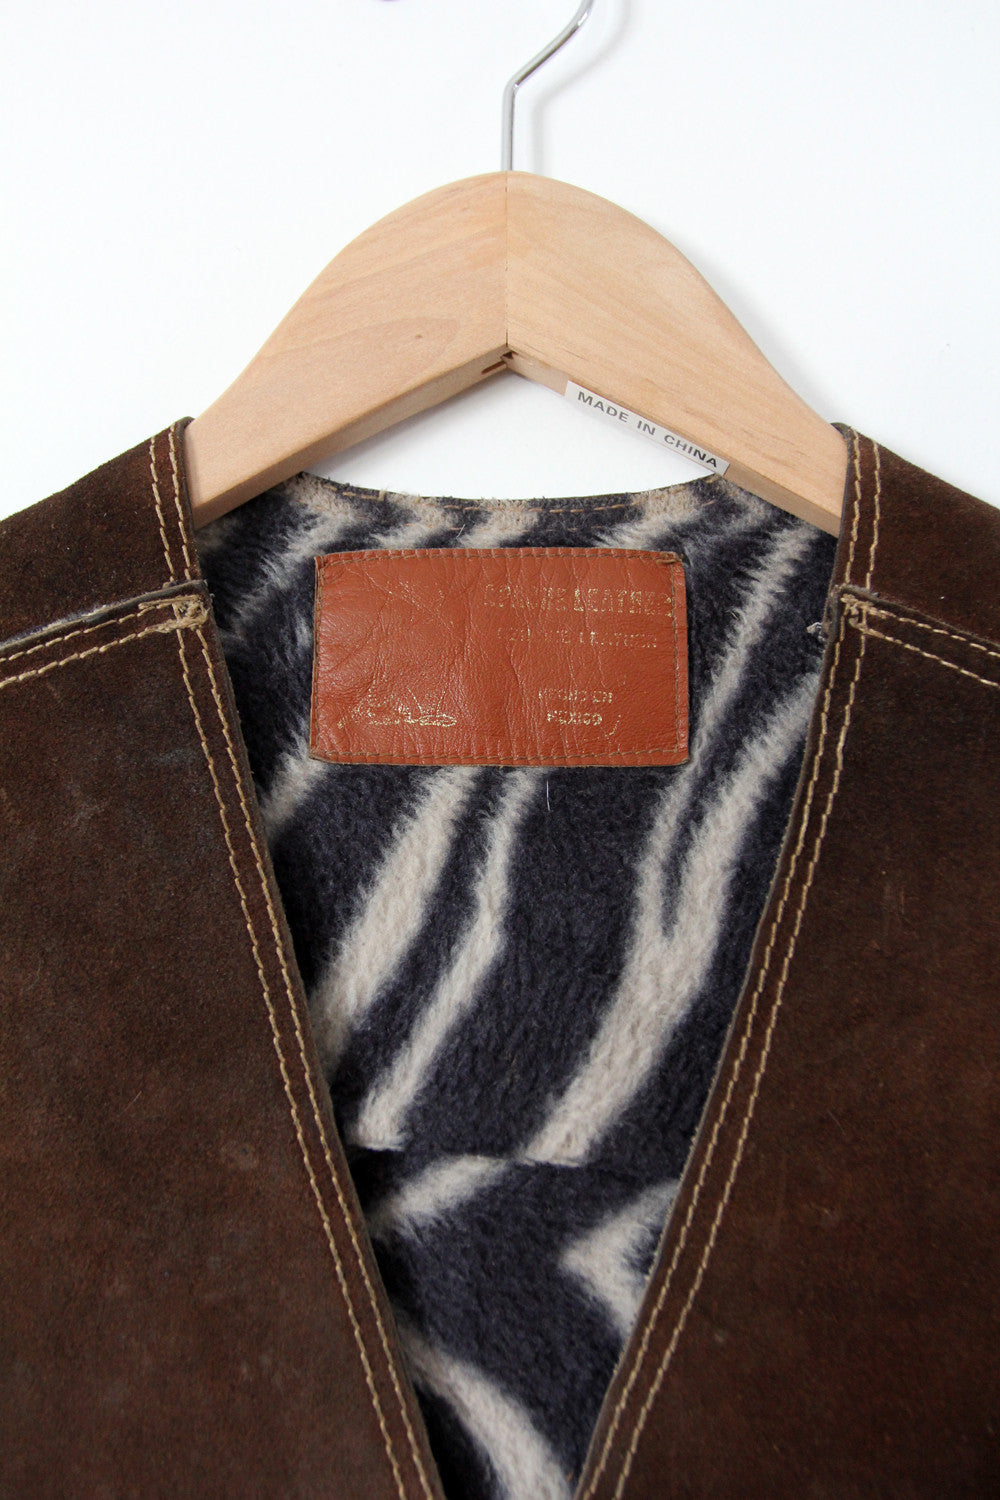 vintage 70s men's suede vest